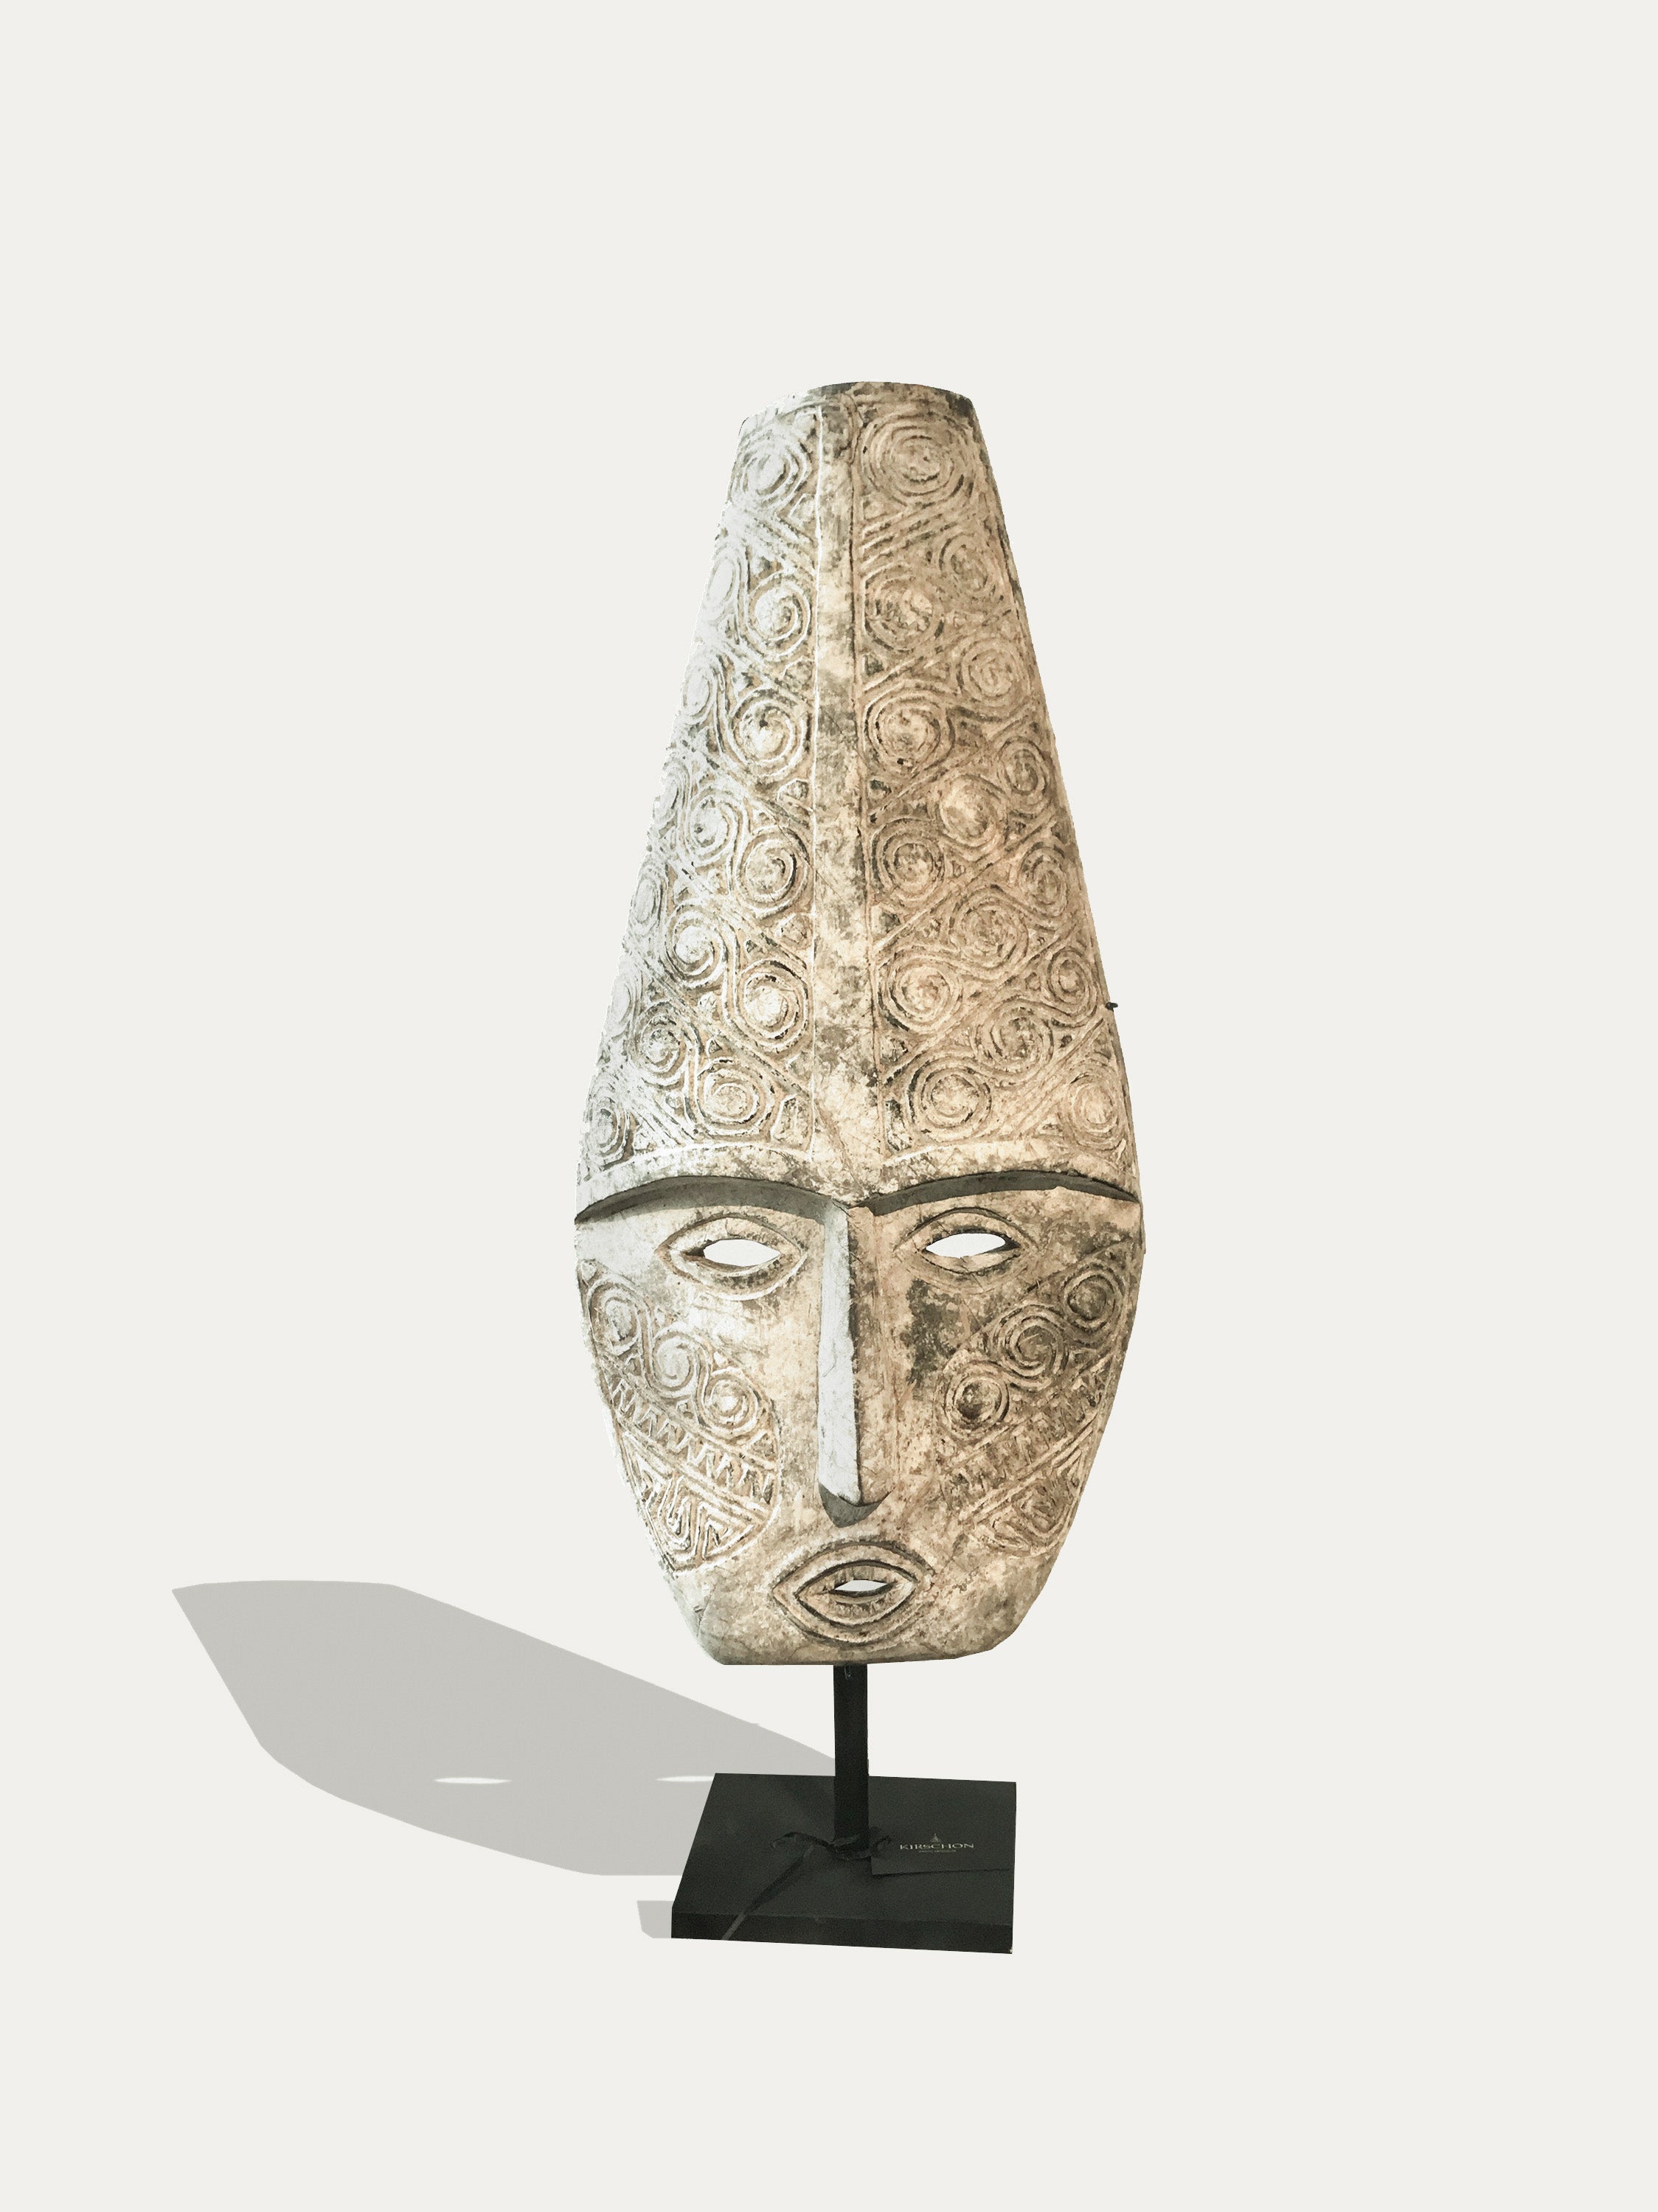 Topeng mask from Sumba - Asian Art from Kirschon